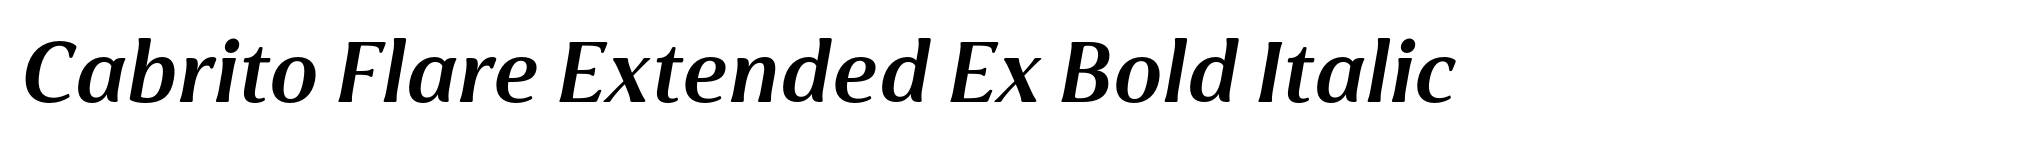 Cabrito Flare Extended Ex Bold Italic image